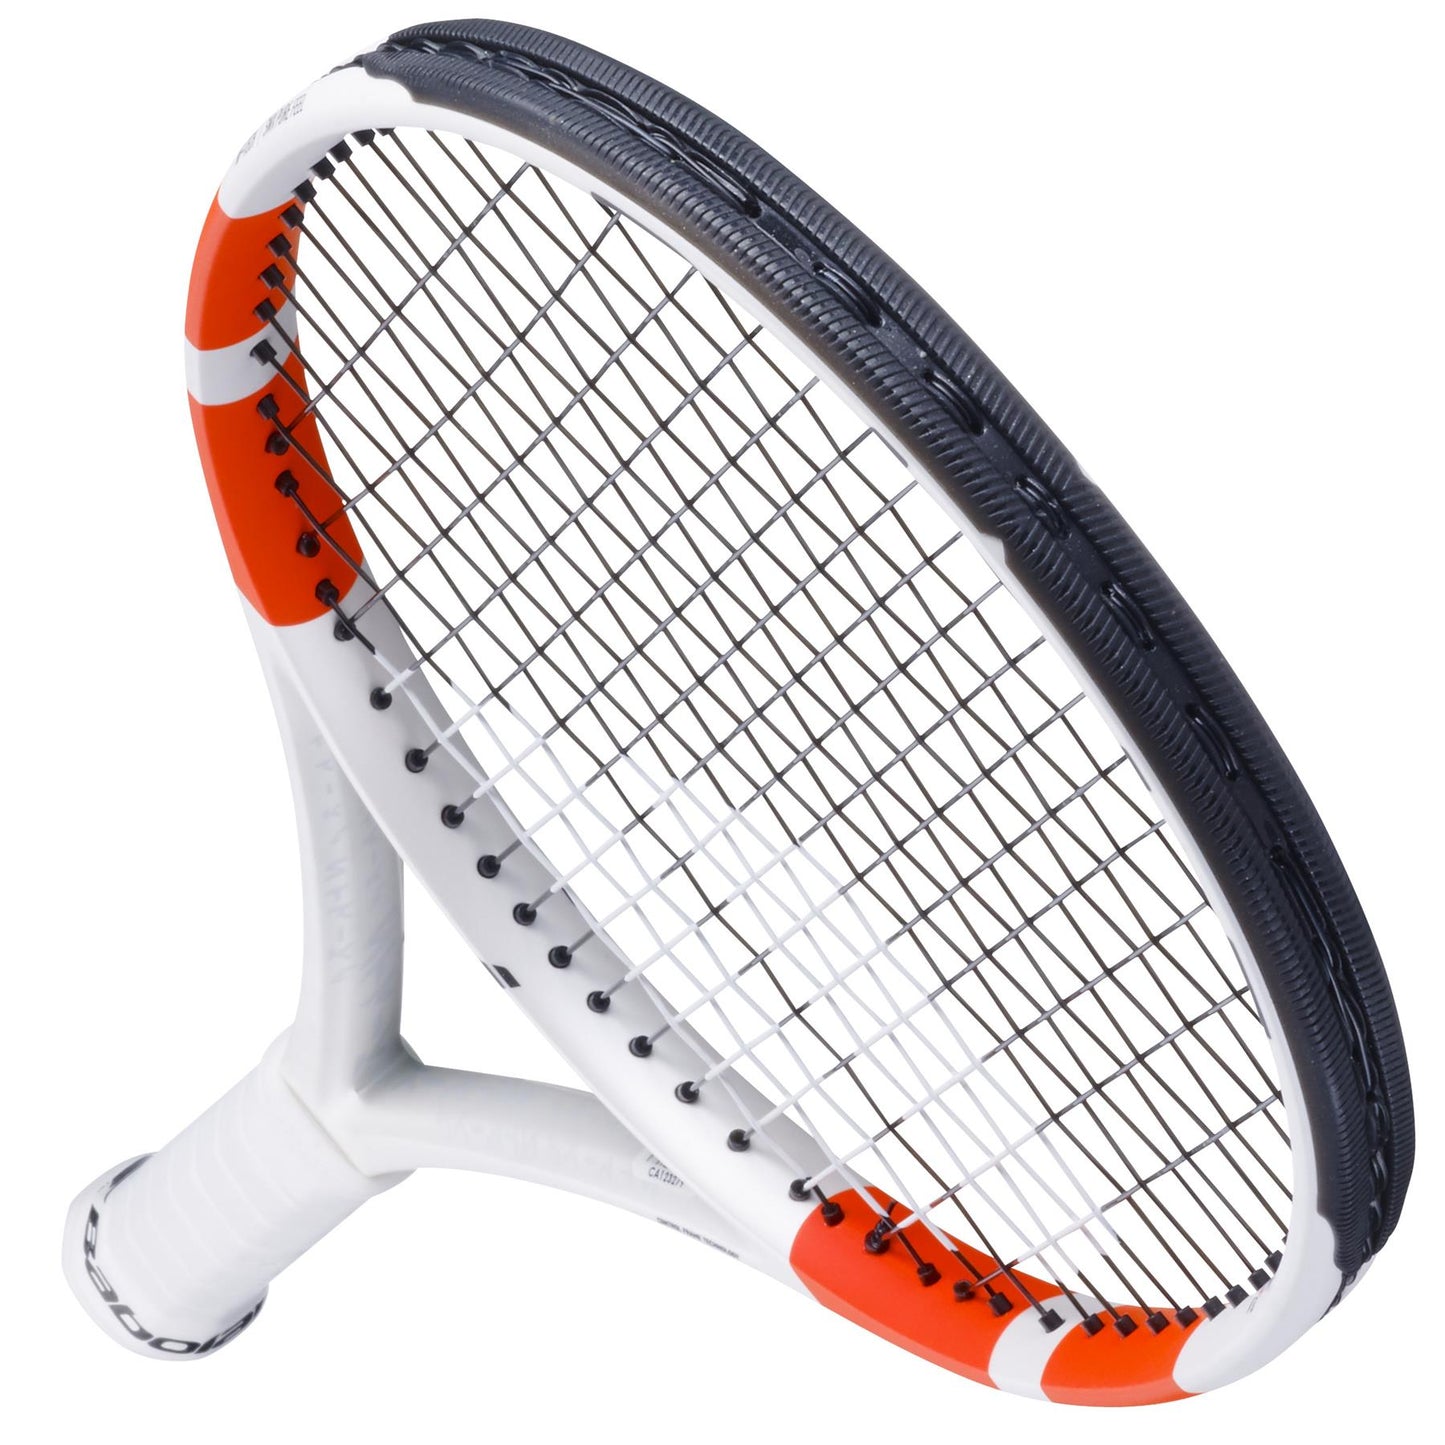 Babolat Pure Strike Team Gen4 Tennis Racket - White / Red / Black - Top